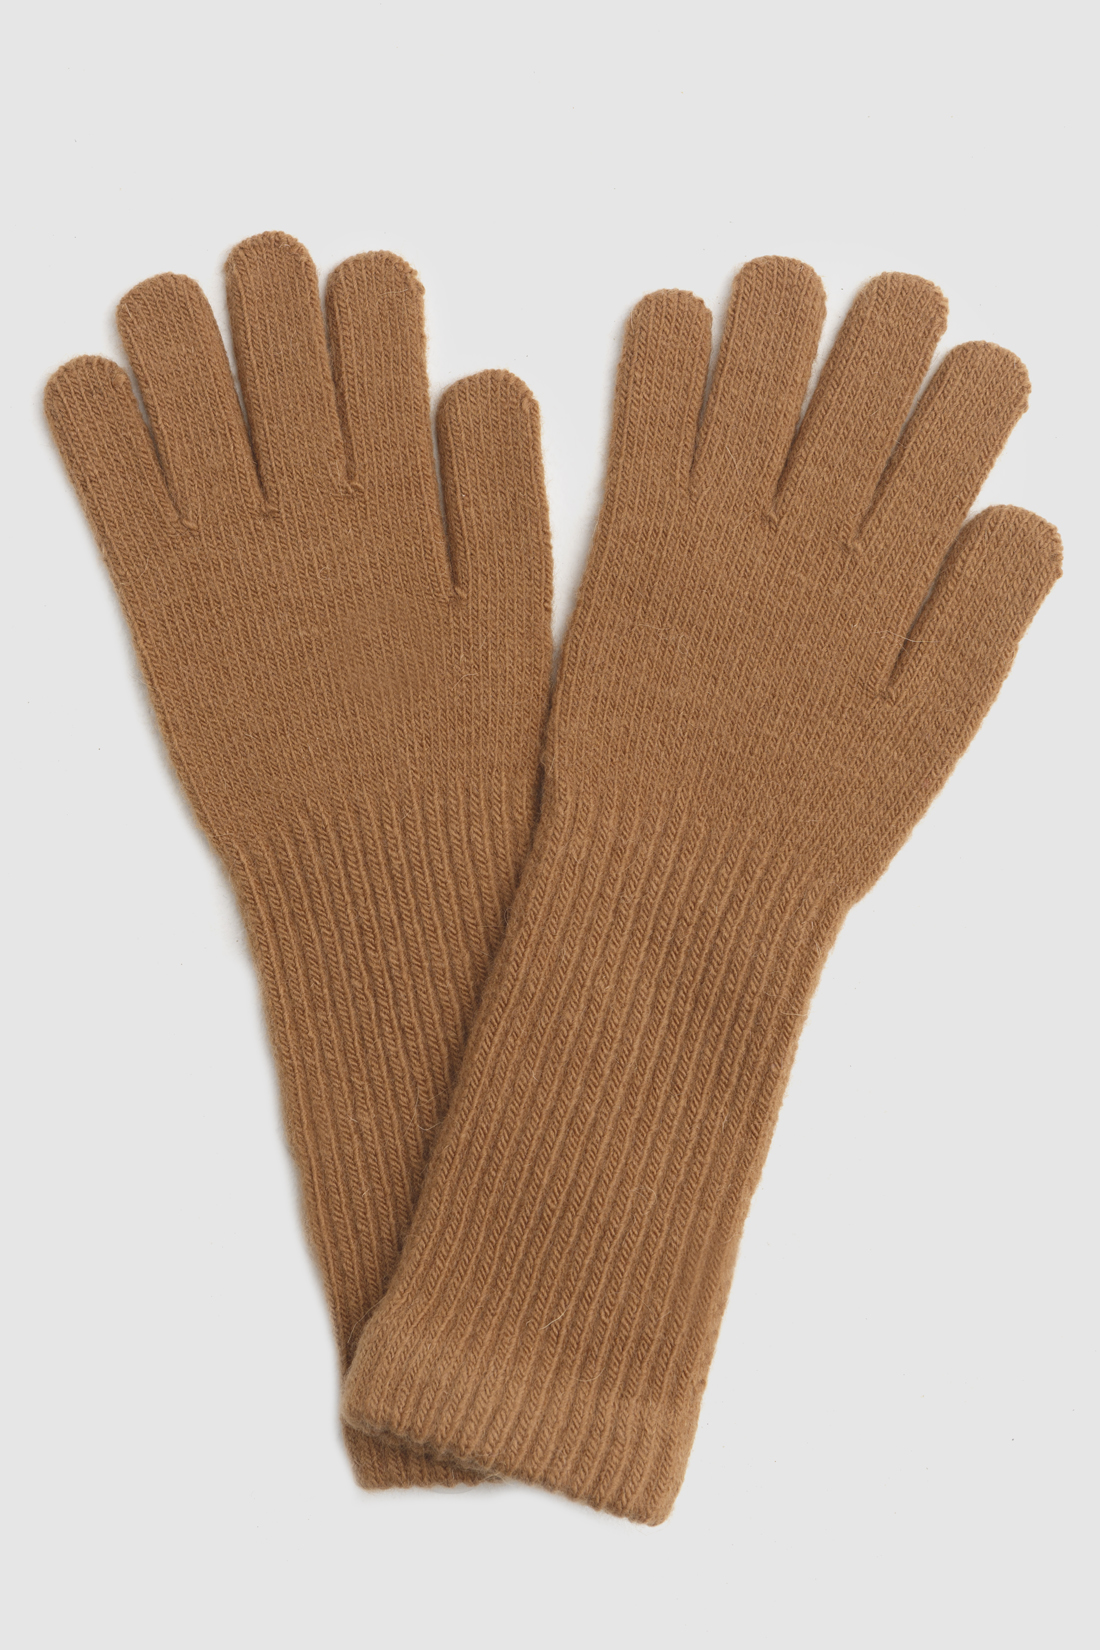 Перчатки (арт. baon B360525), размер Без/раз, цвет бежевый Перчатки (арт. baon B360525) - фото 1